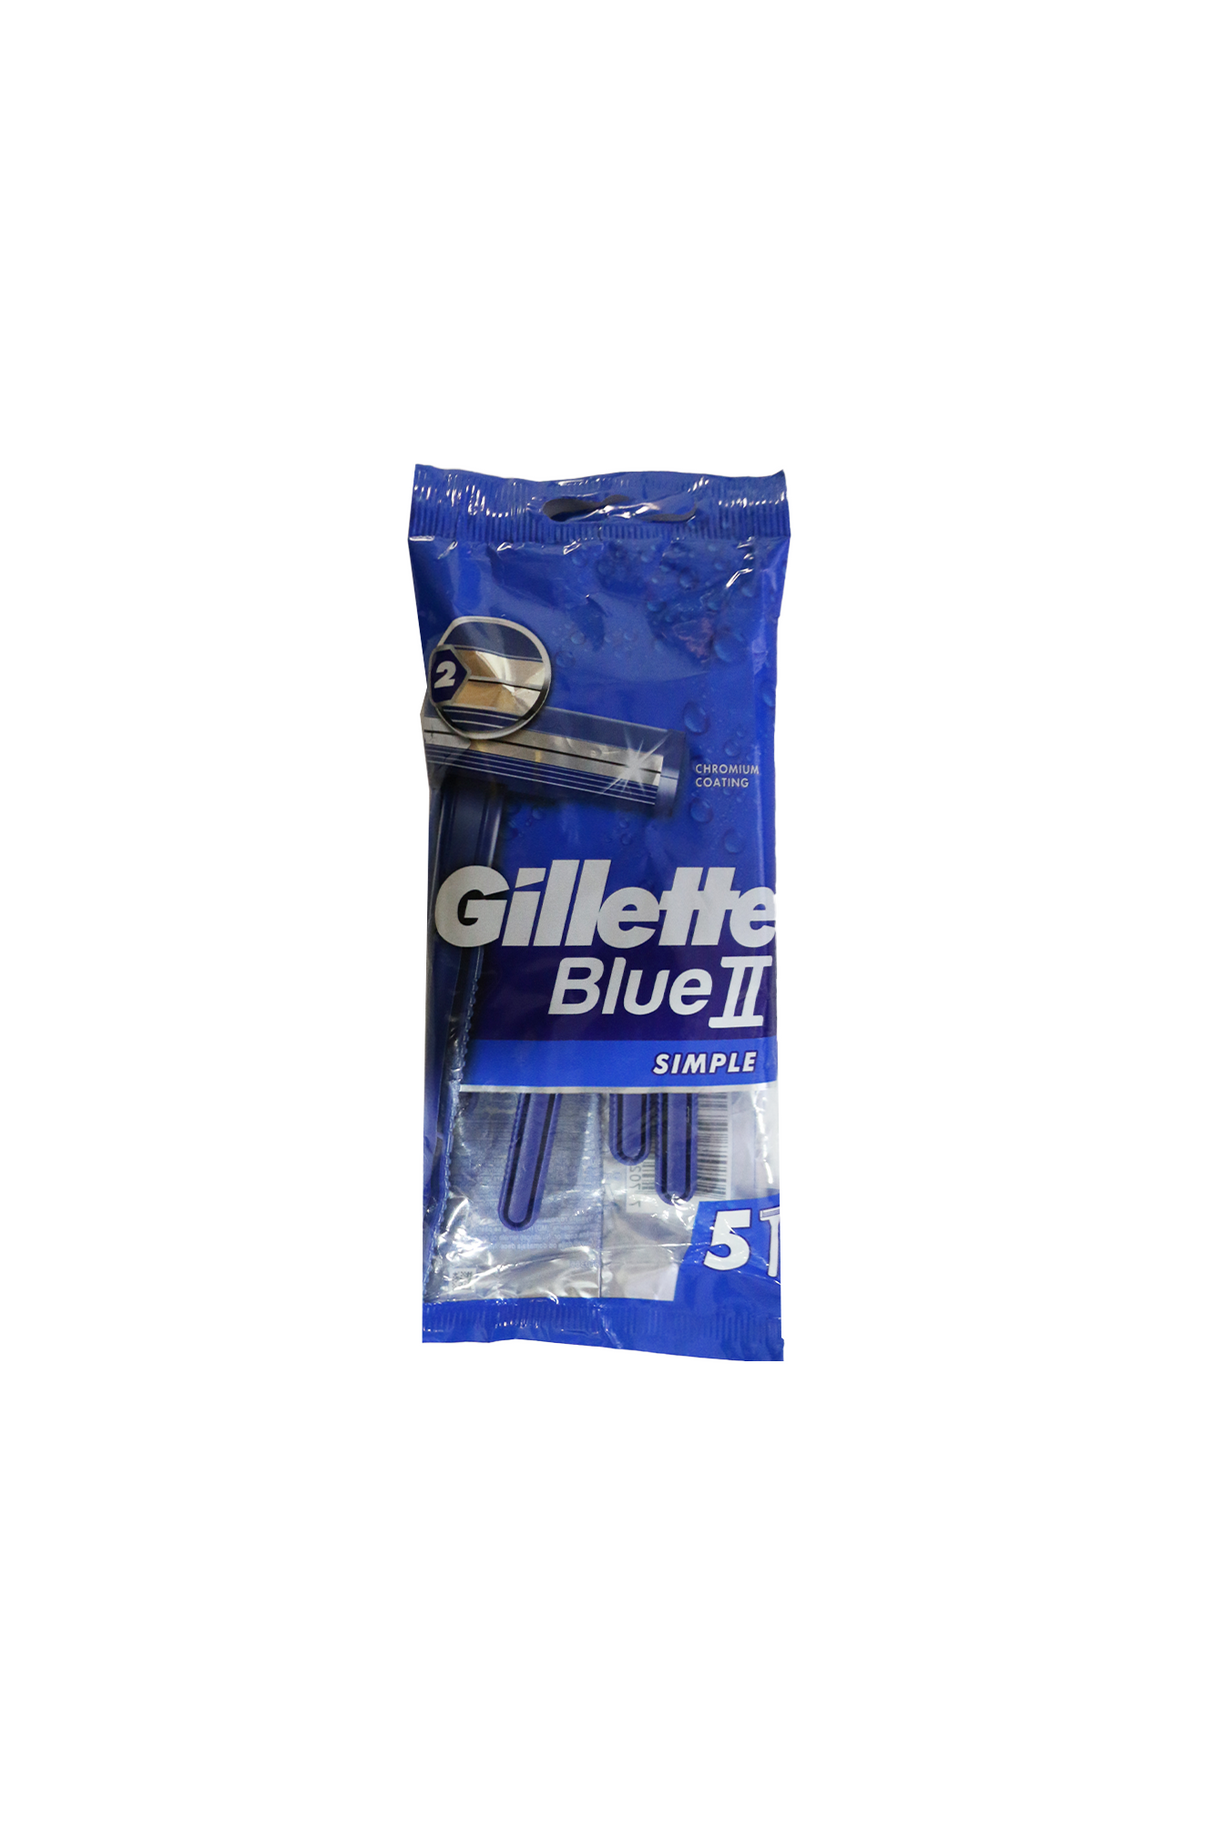 gillette razor blue2 simple 5p